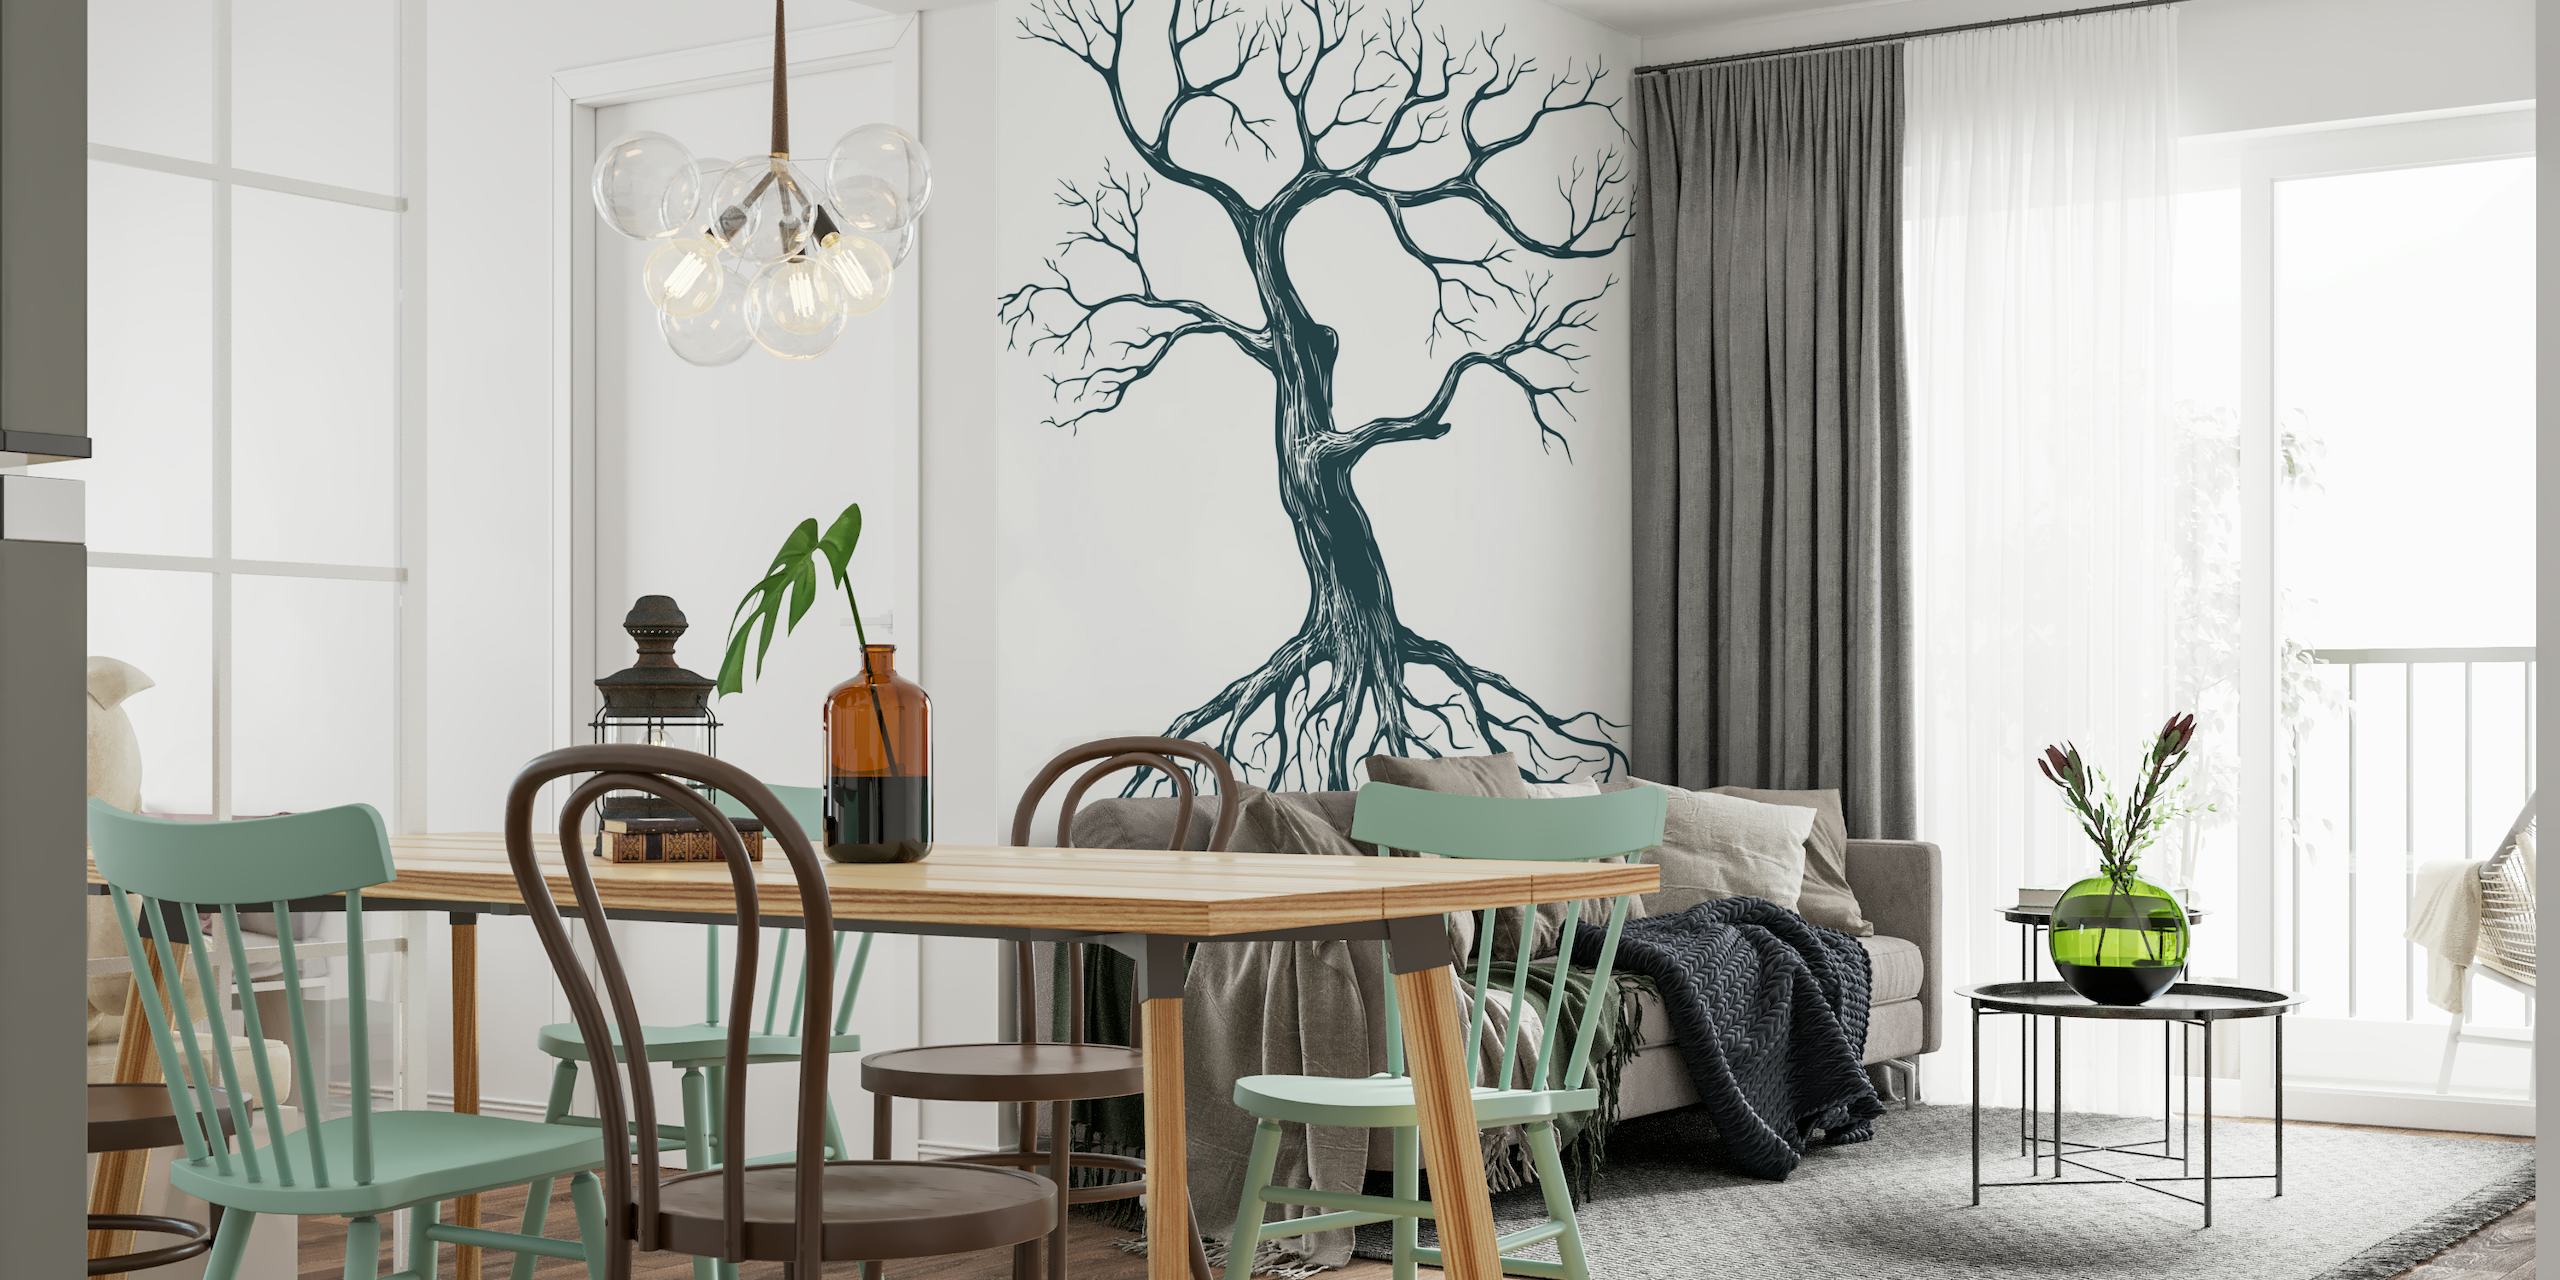 Tree whitout leaves wallpaper